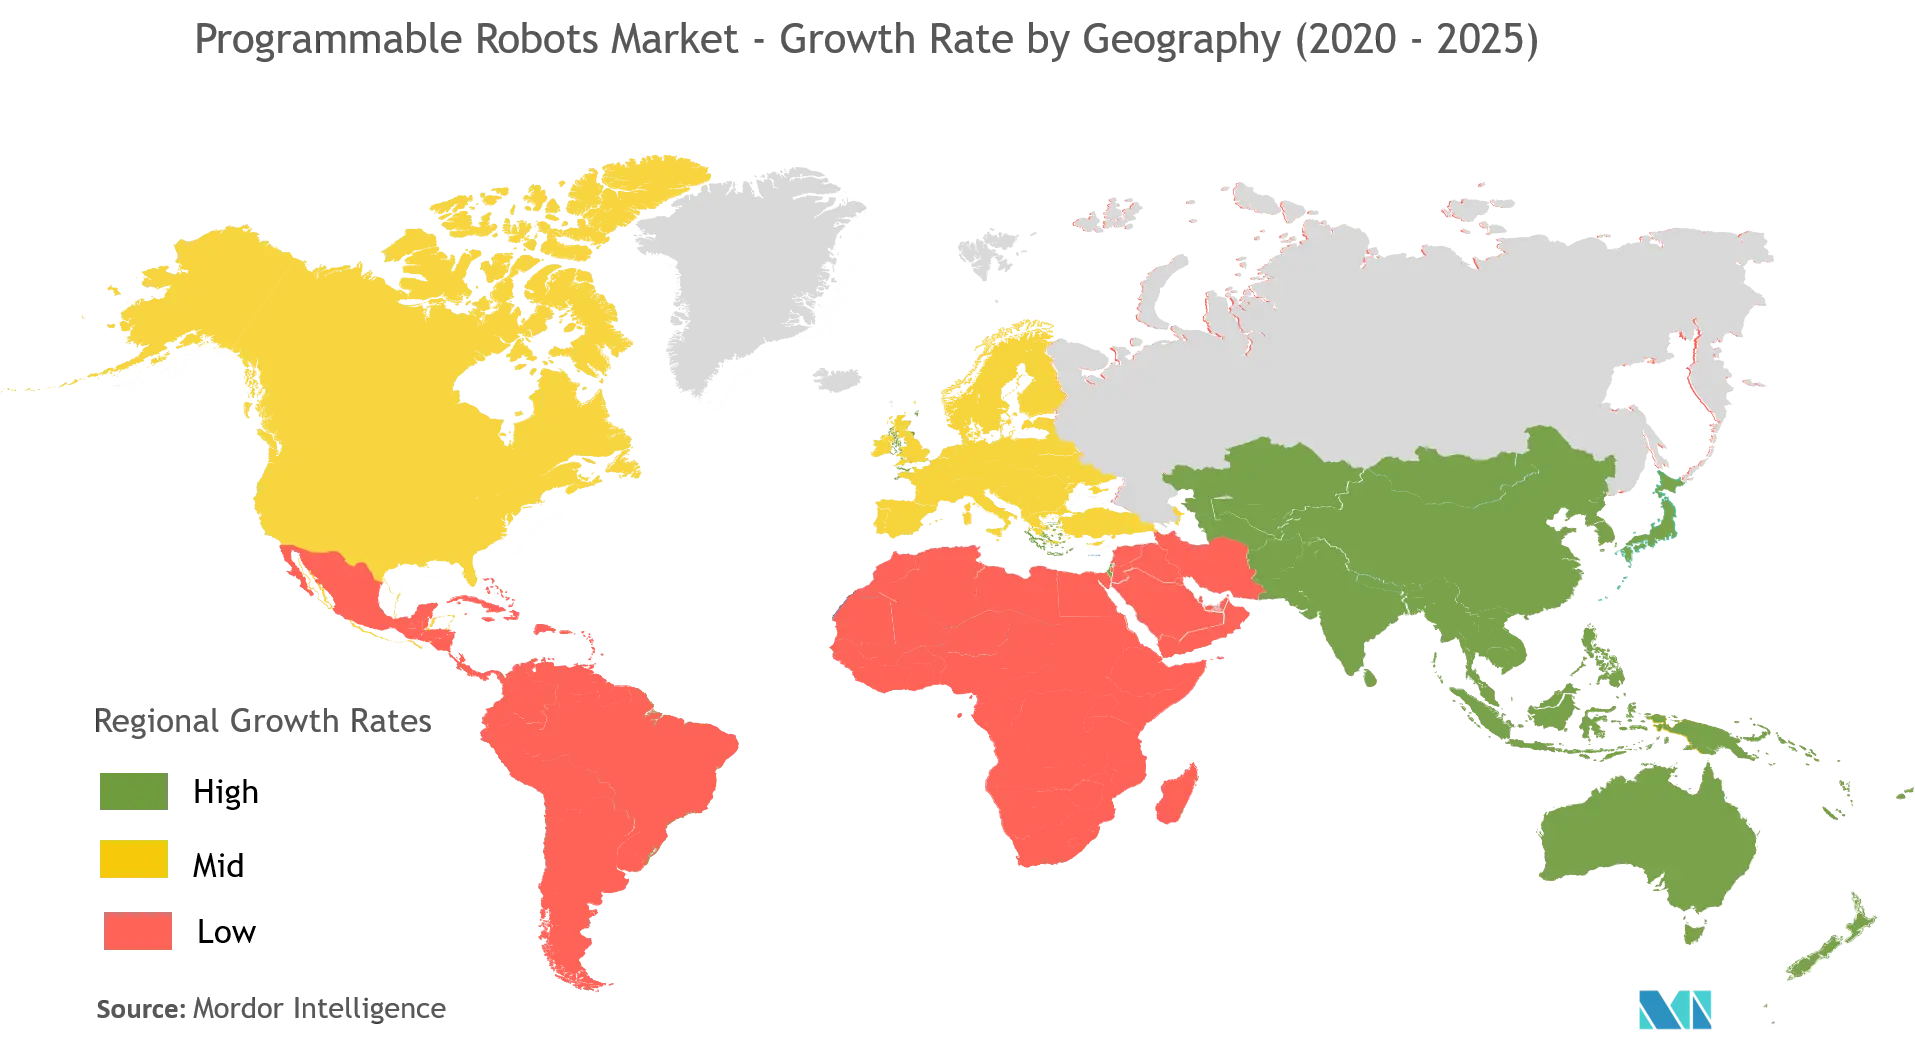 programmable robots market share